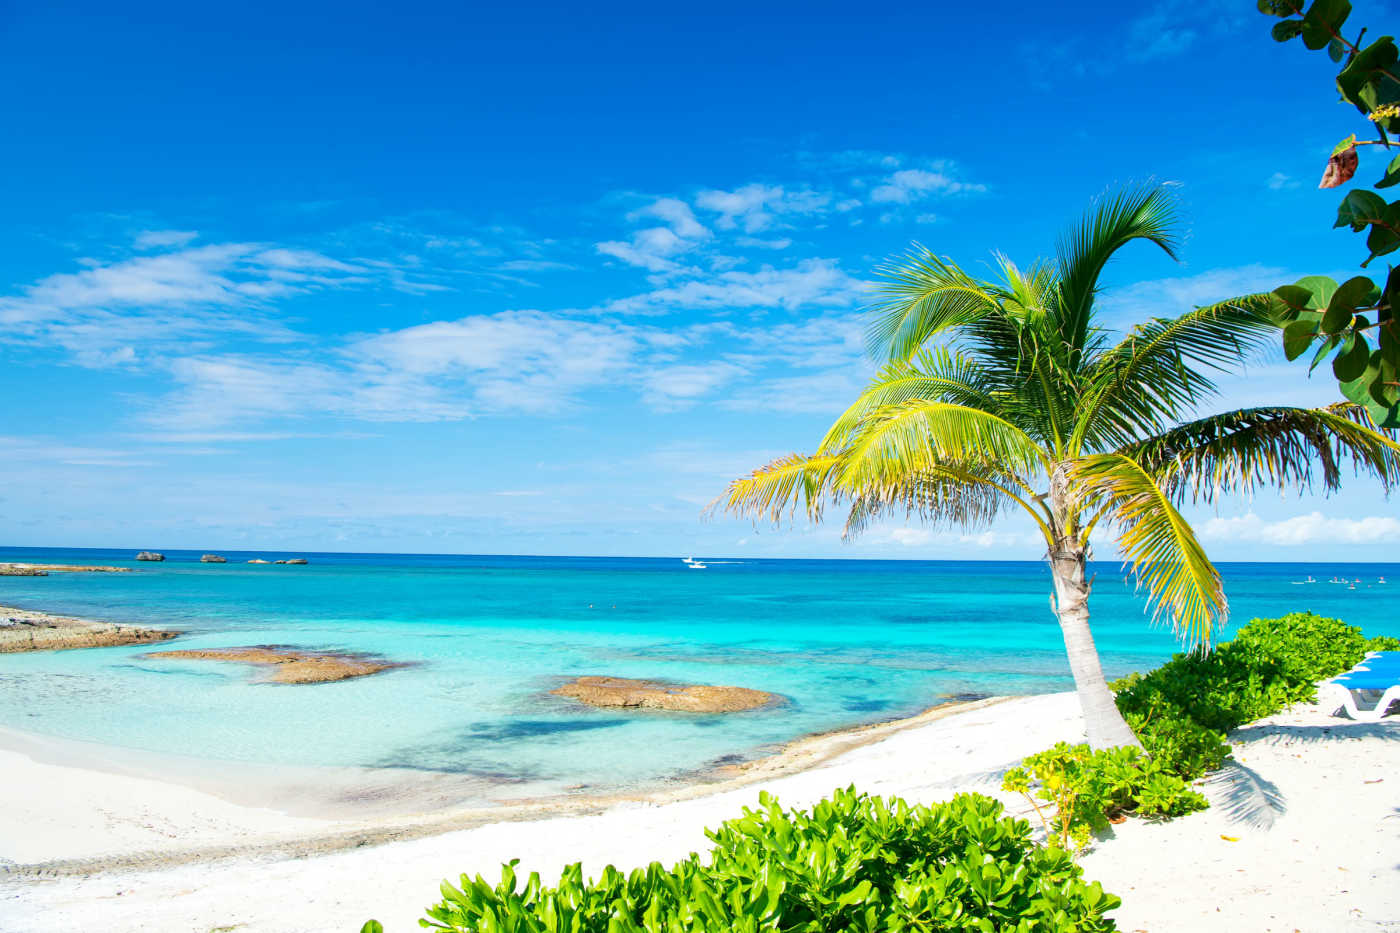 Riu Palace Paradise Island- First Class Paradise Island, Bahamas